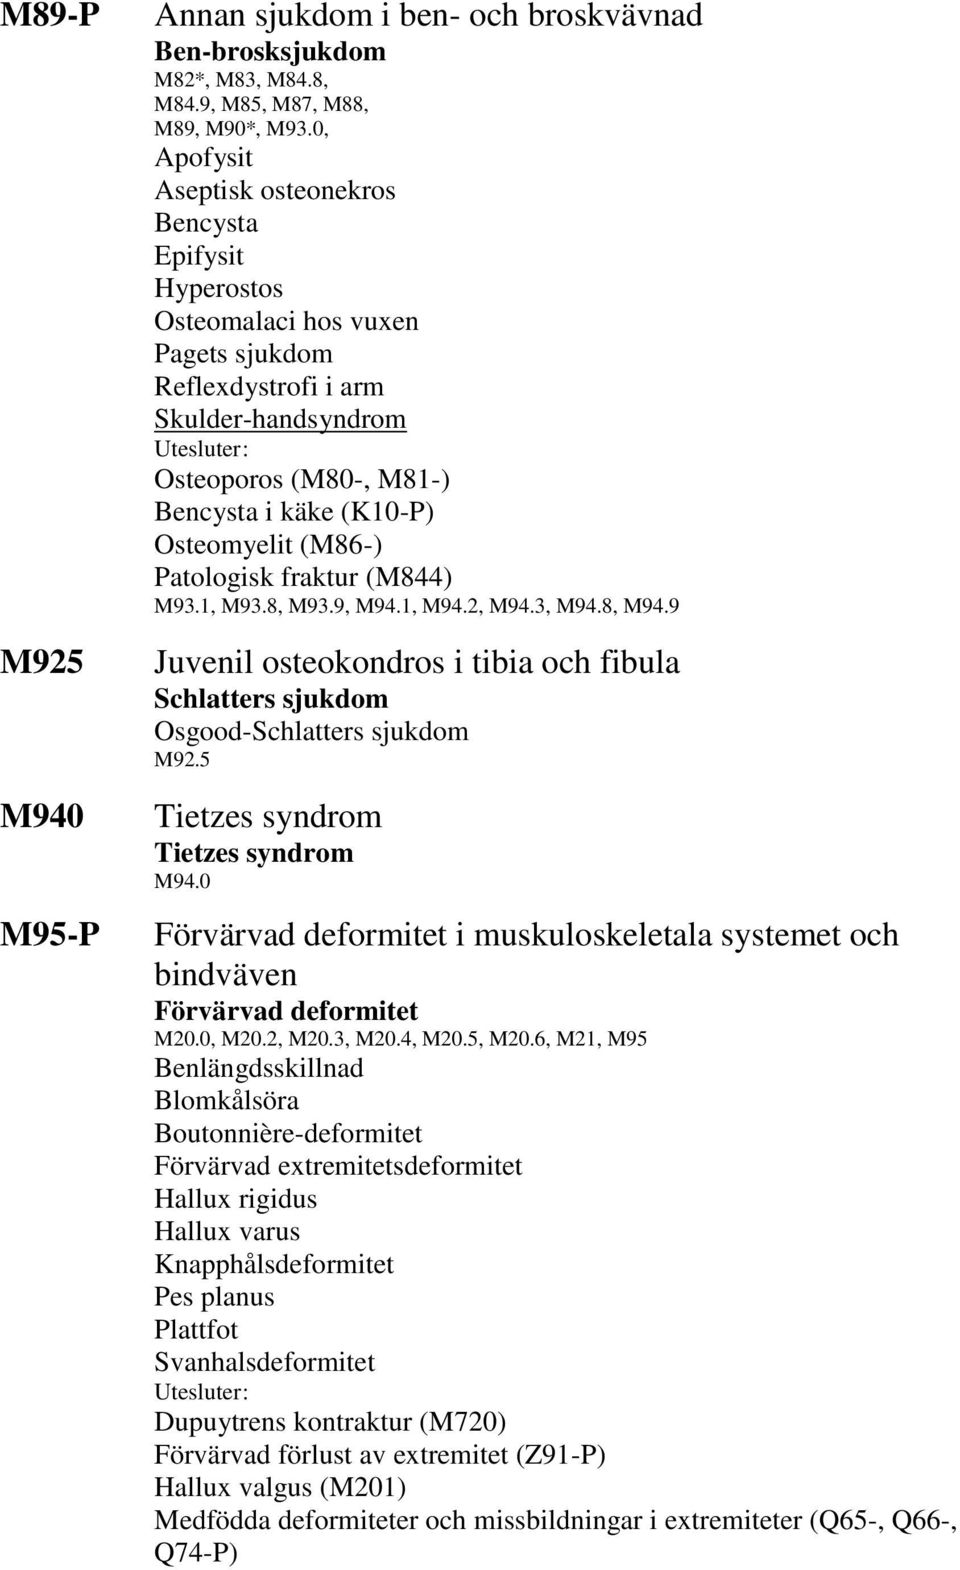 (M86-) Patologisk fraktur (M844) M93.1, M93.8, M93.9, M94.1, M94.2, M94.3, M94.8, M94.9 Juvenil osteokondros i tibia och fibula Schlatters sjukdom Osgood-Schlatters sjukdom M92.